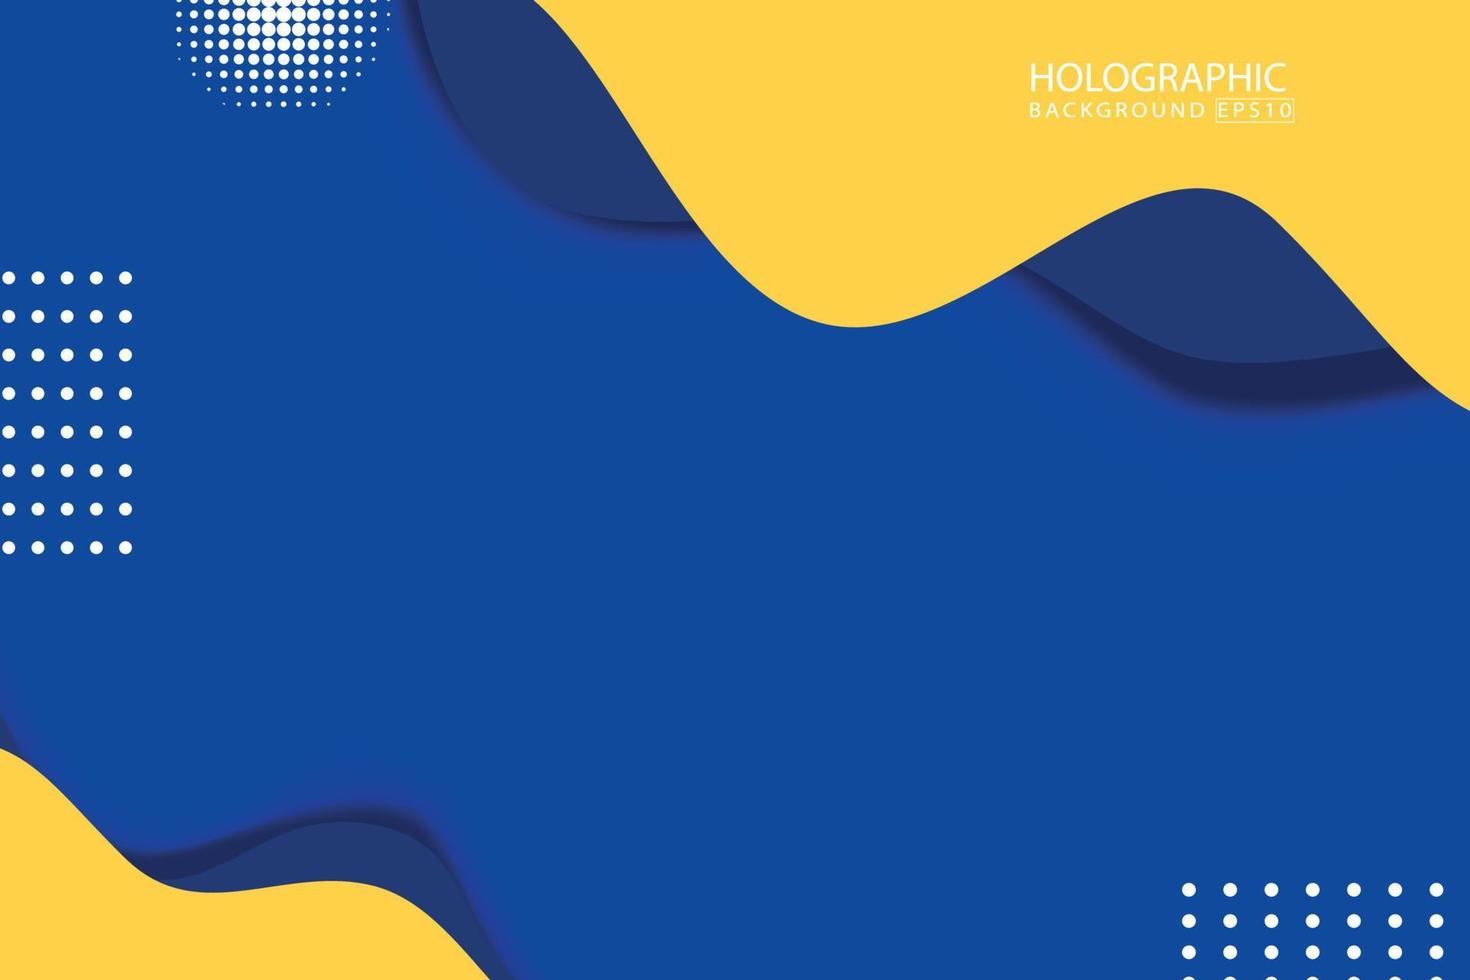 stijlvolle moderne banner ontwerp vector.holographic achtergrond eps 10 vector